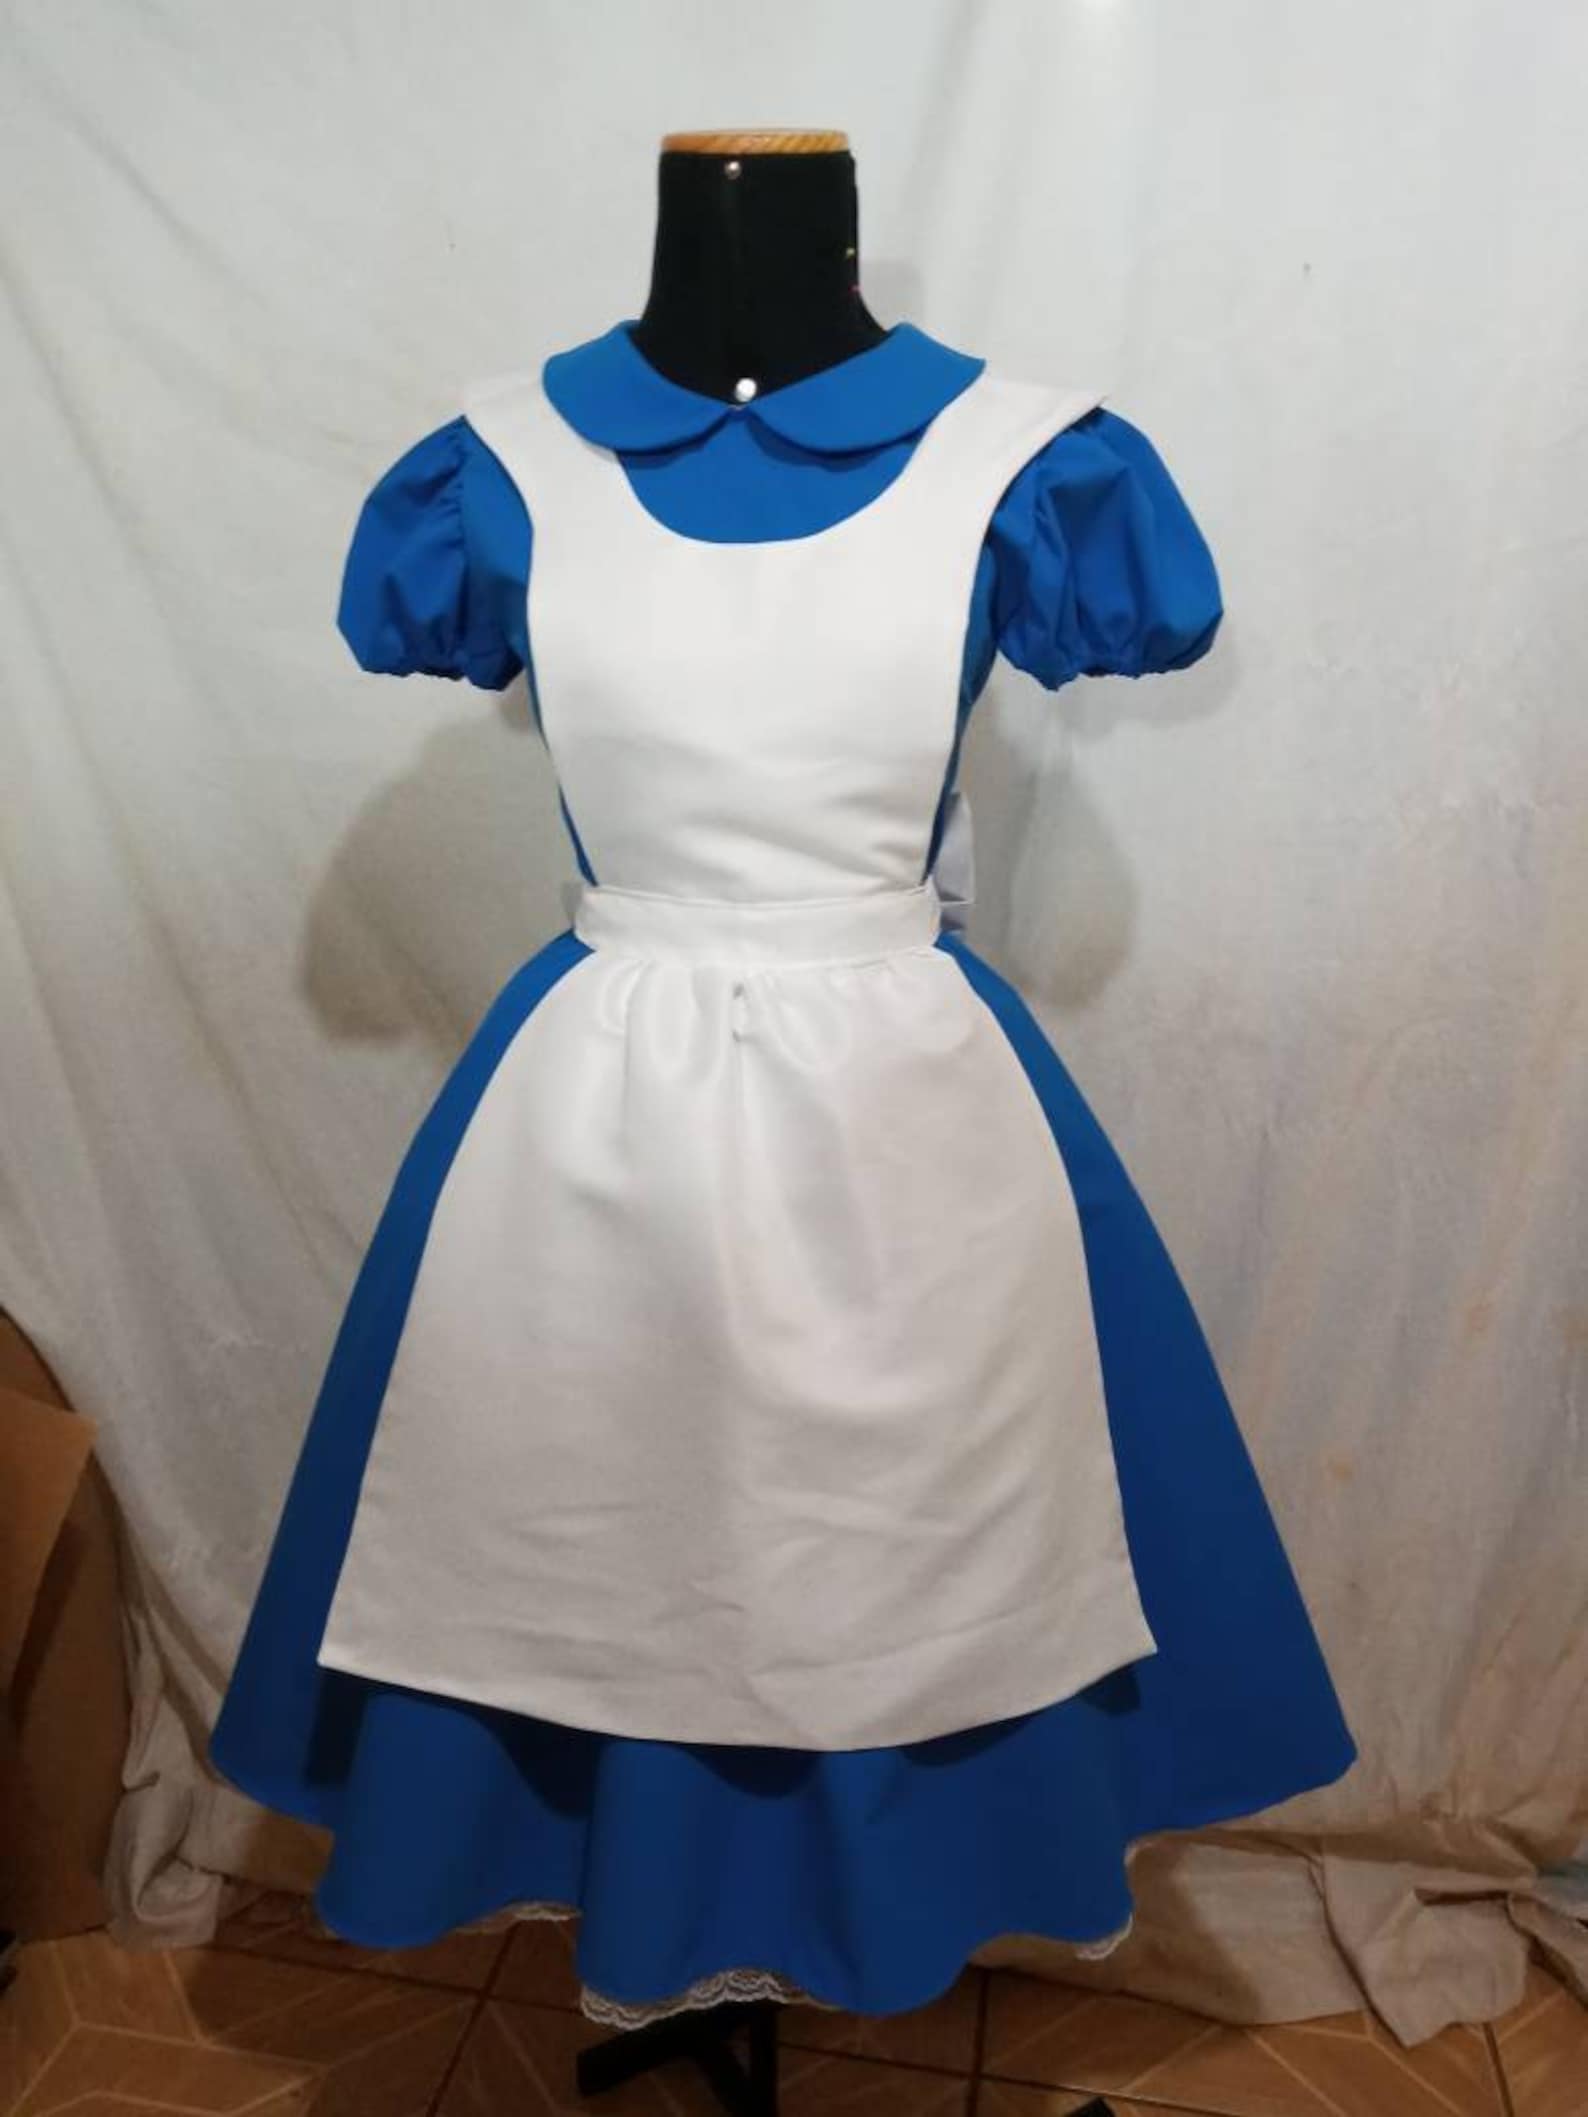 Cosplay Alice in the wonderland Costume dress adult Disney | Etsy